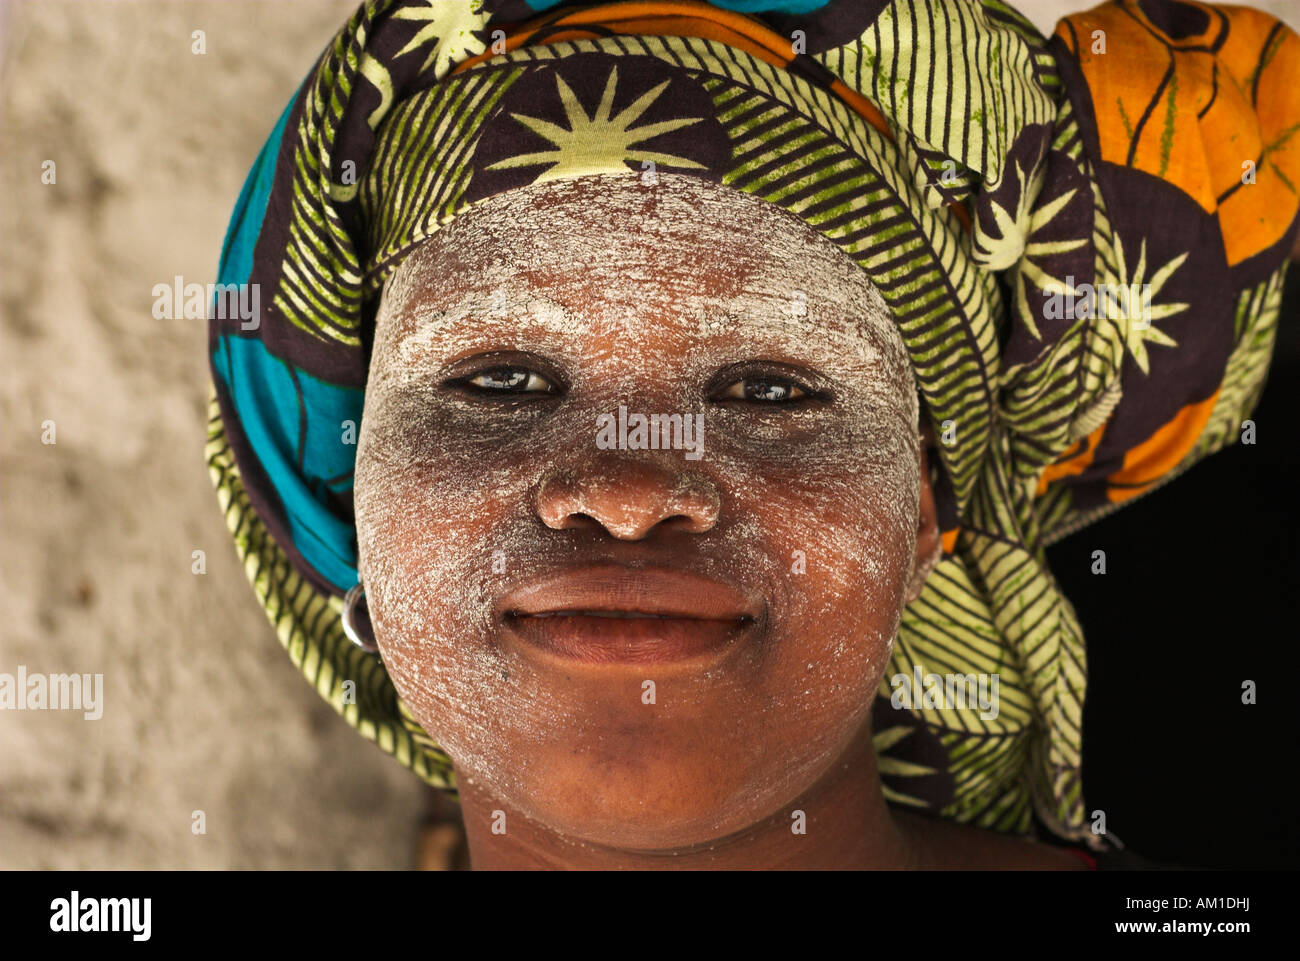 Frau mit Tradicional Gesichtsmaske, Matemo Island, Quirimbas Inseln, Mosambik, Afrika Stockfoto